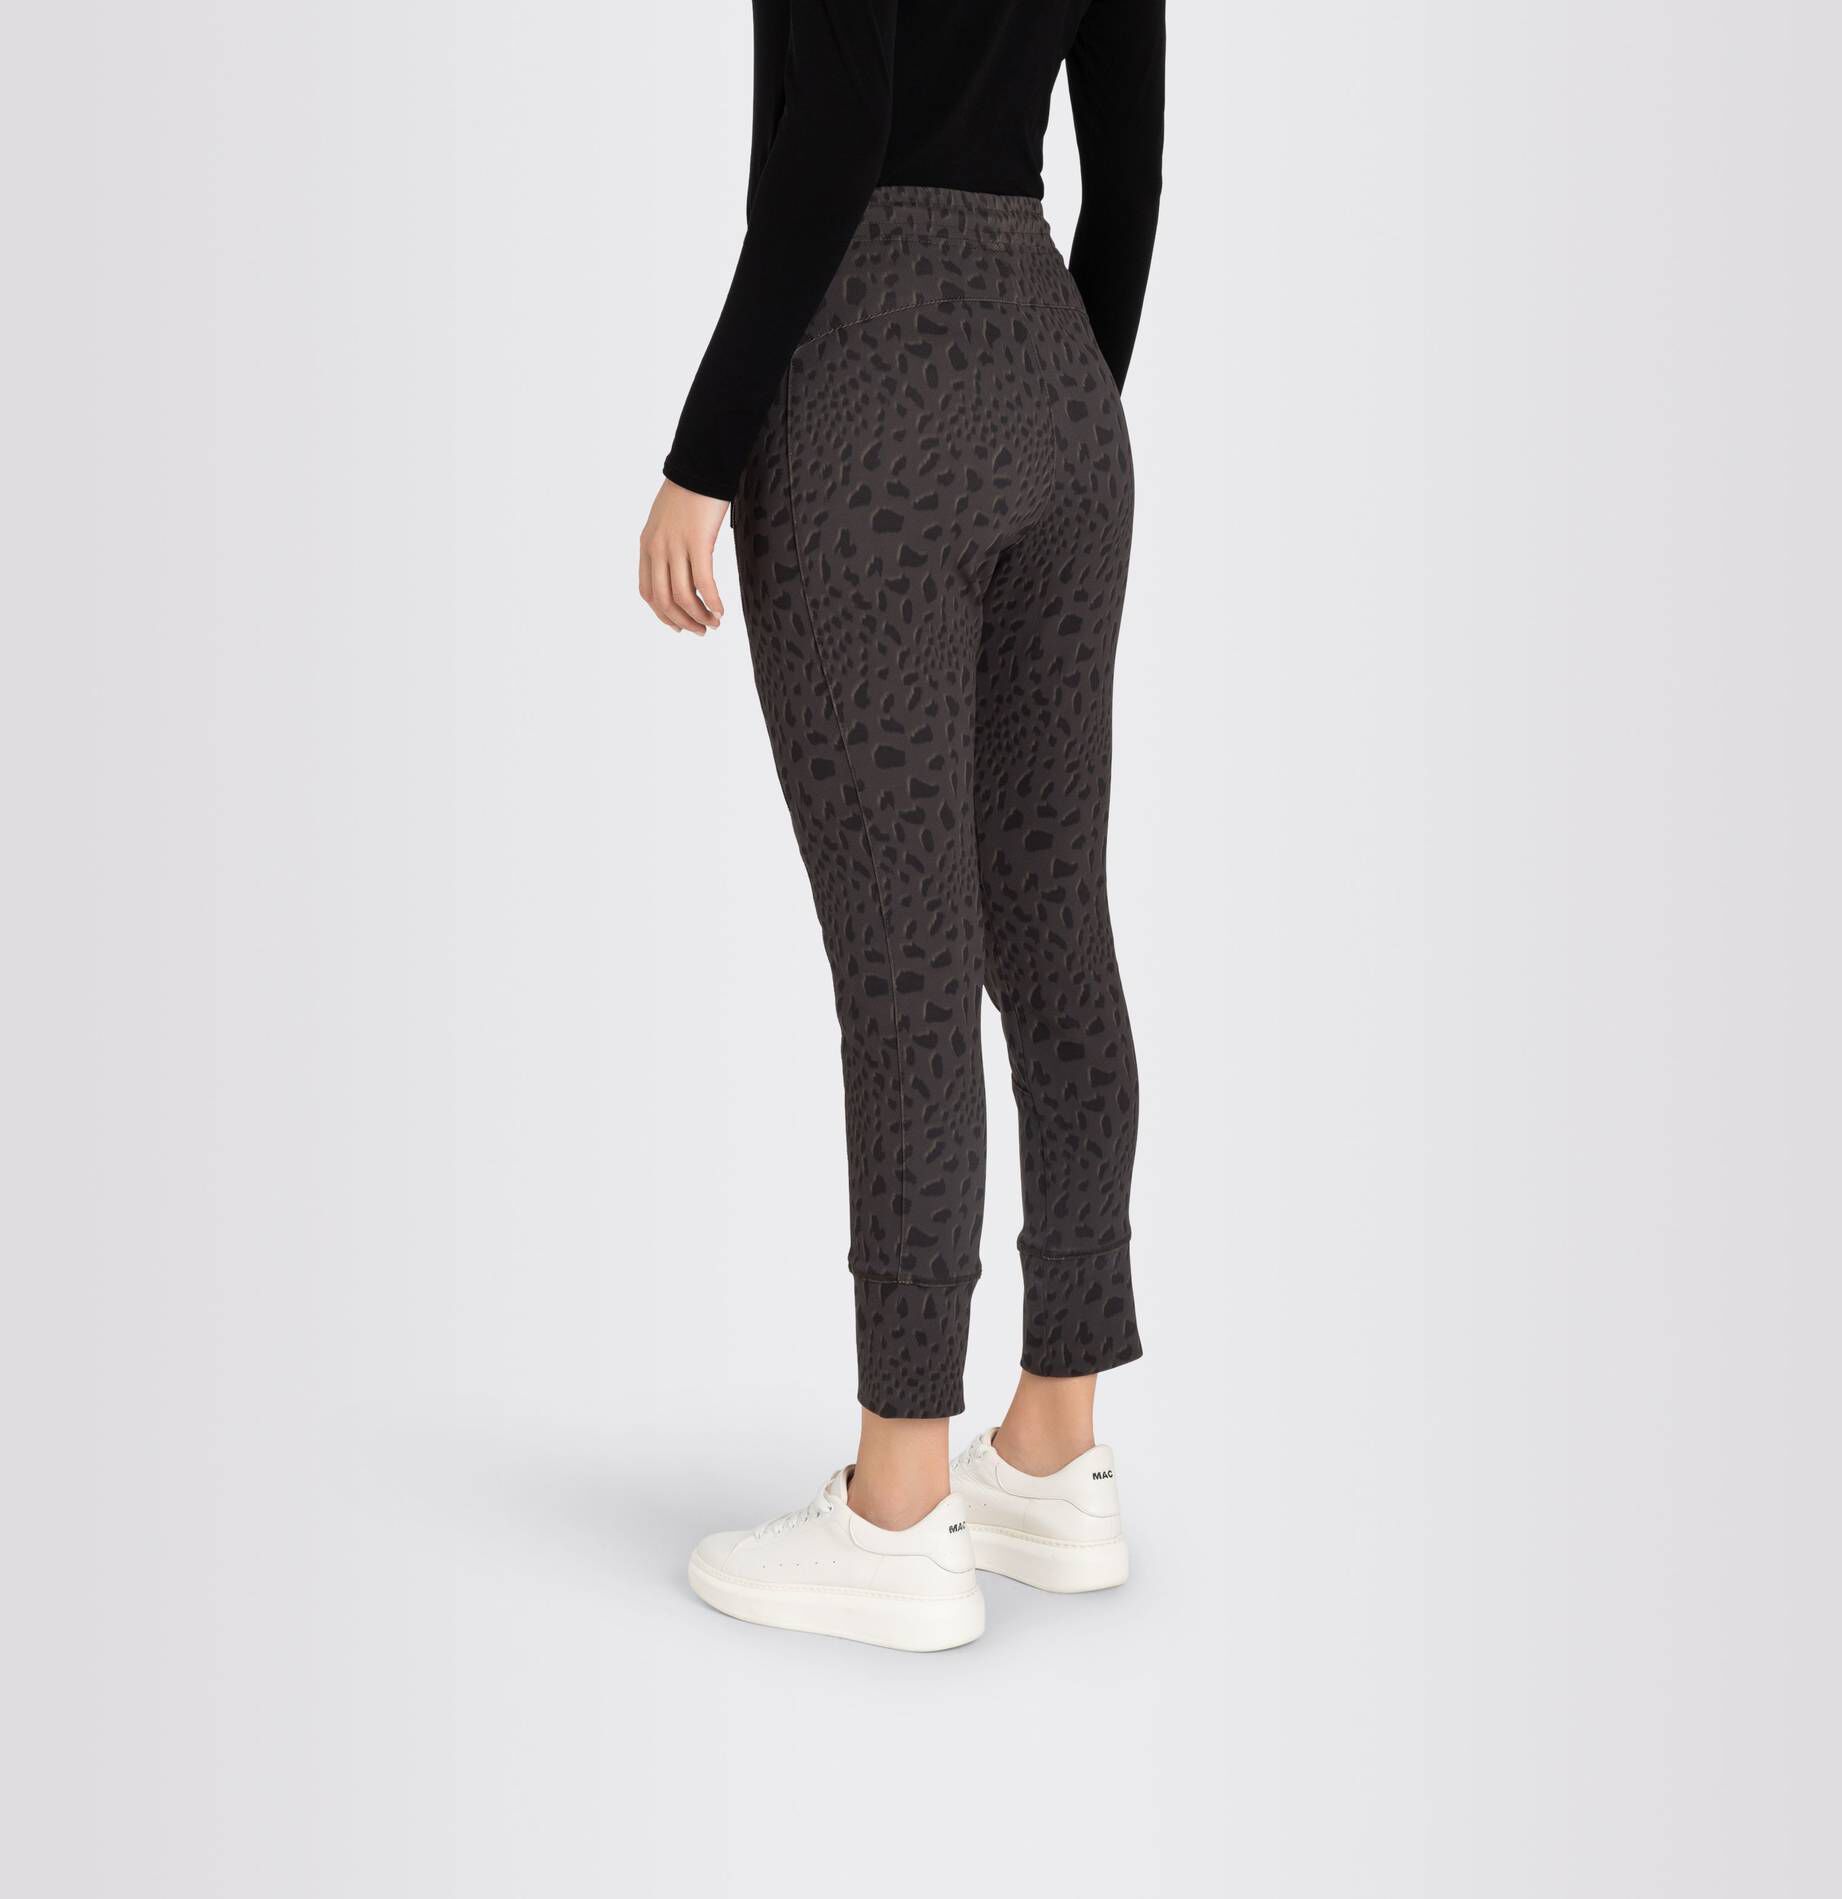 Damen Jogpants | FUTURE kaufen MAC engelhorn